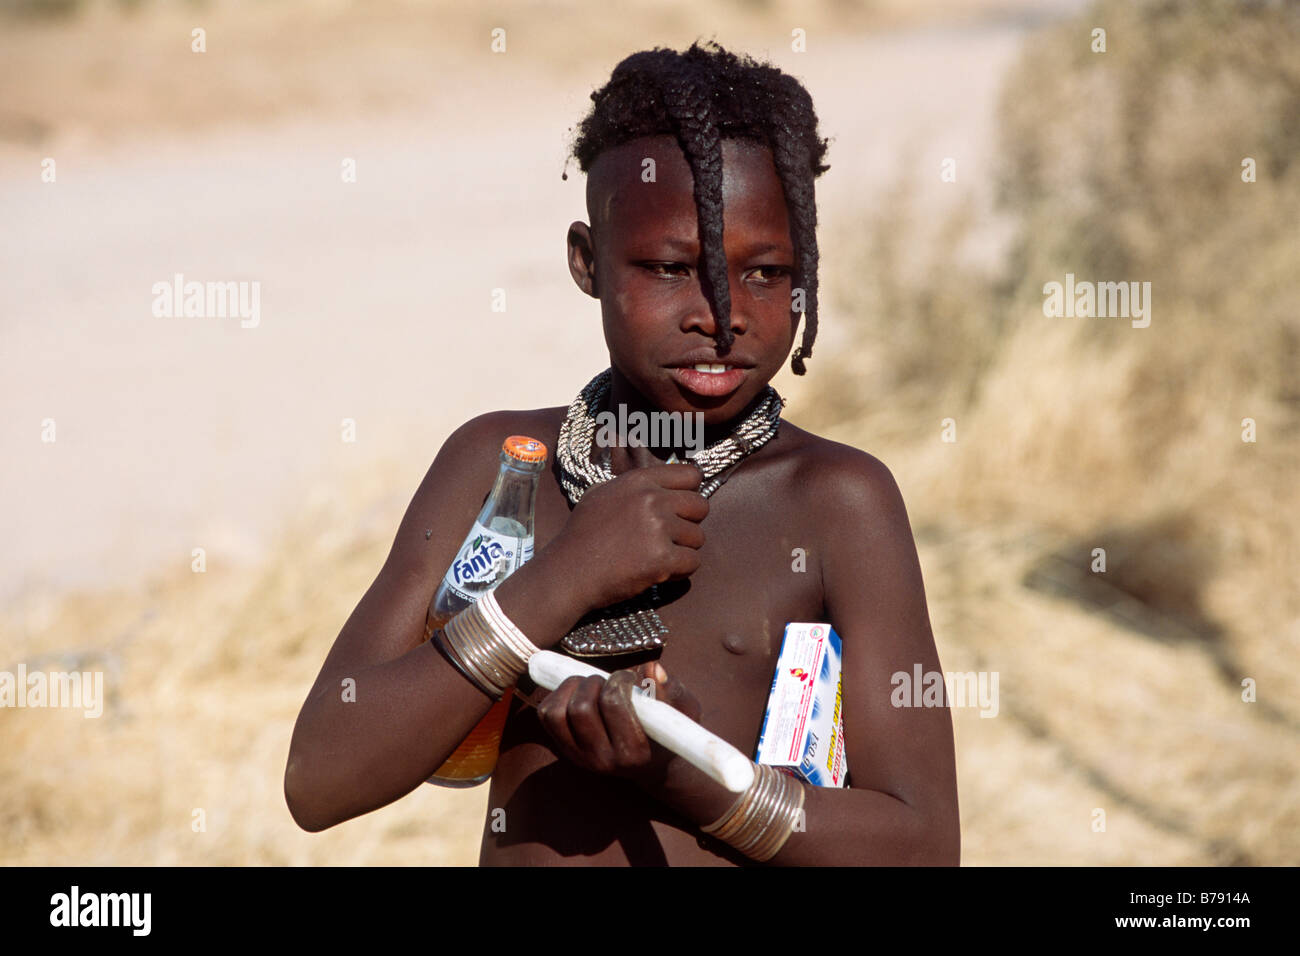 Himba girl bearing products of Western civilization, portrait, Kaokoveld, Namibia, Africa Stock Photo